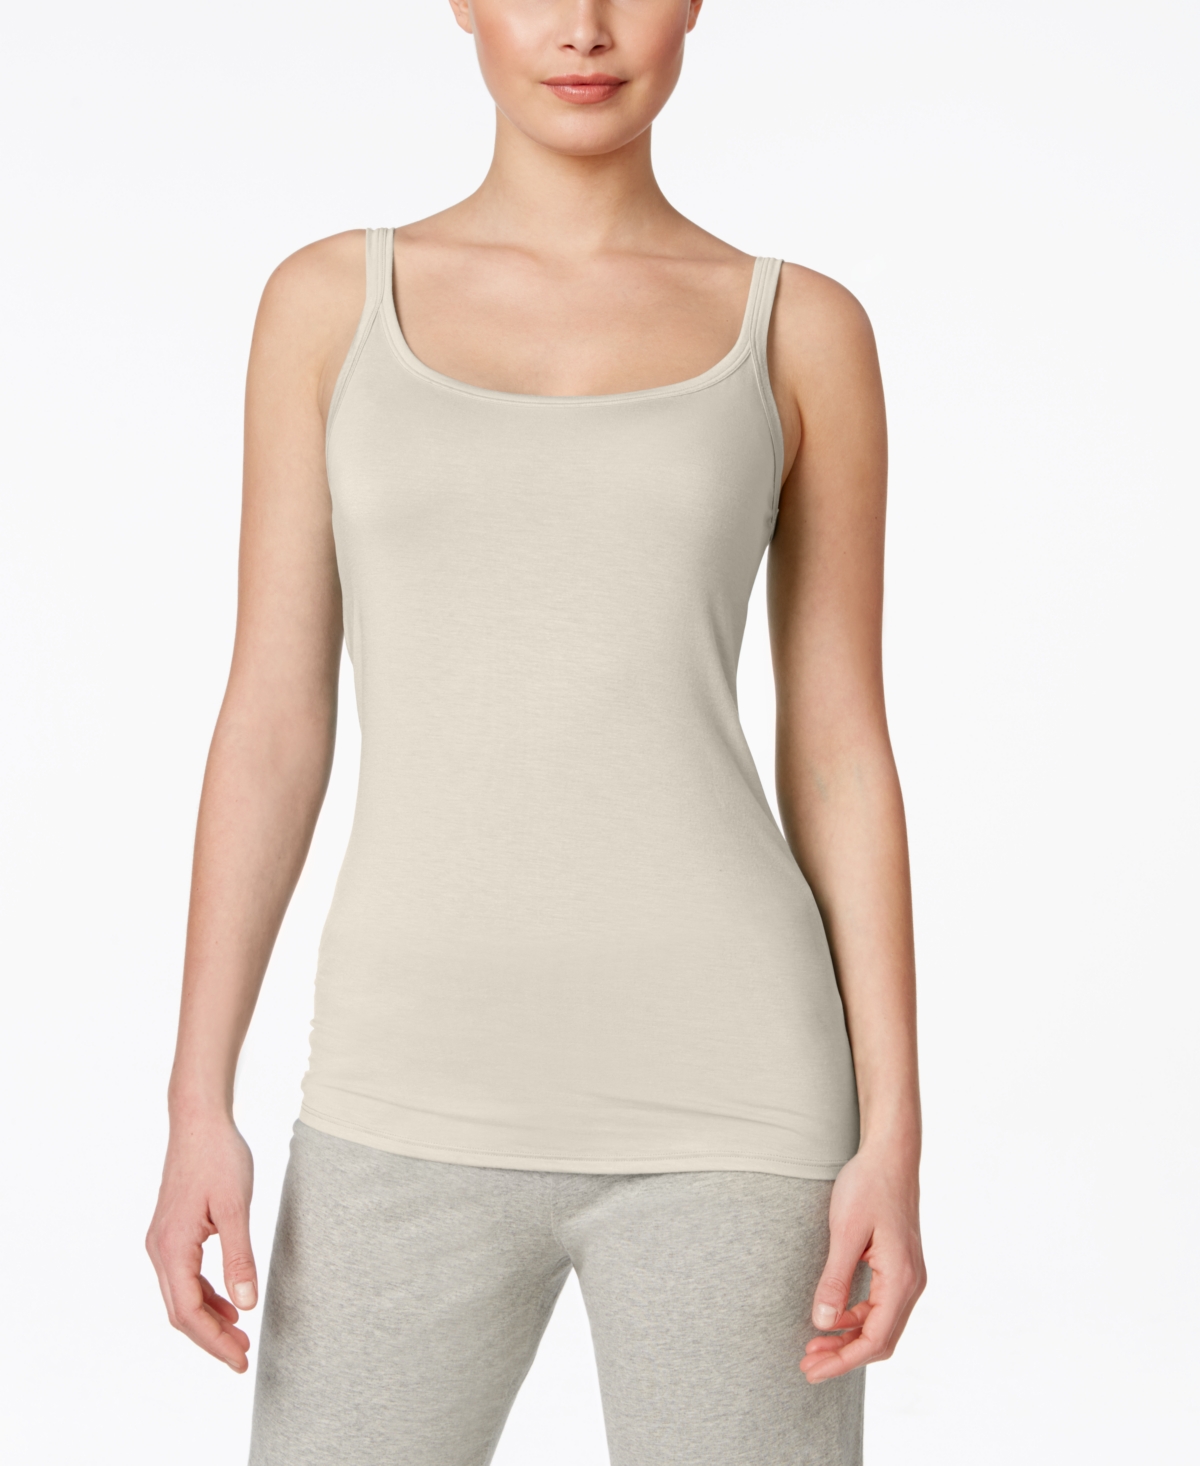 Women's Super Soft Breathable Camisole 2074 - White